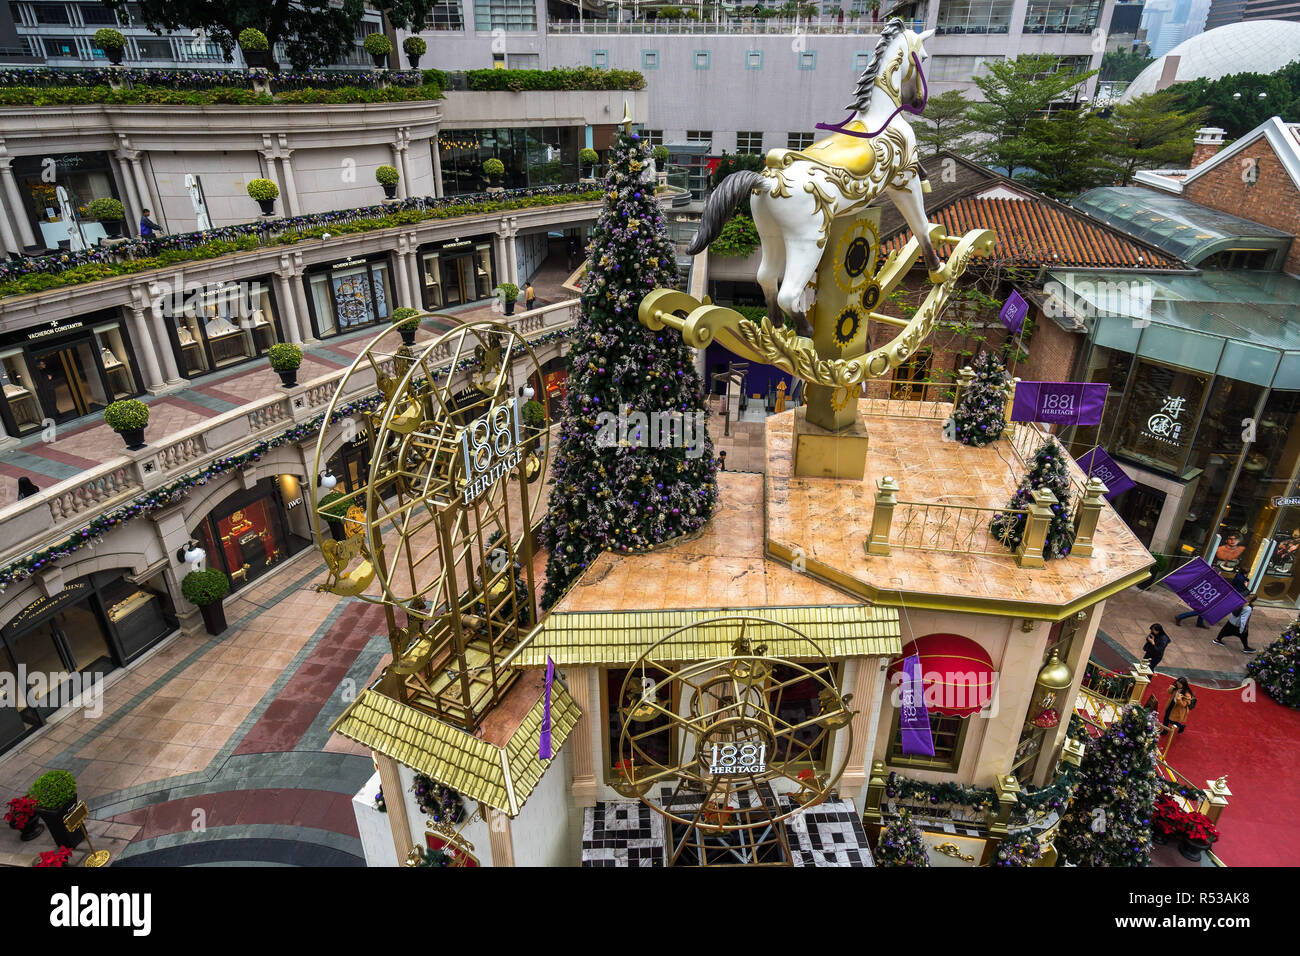 1881 Heritage Shopping Mall für Weihnachten dekoriert. Hong Kong, Kowloon, Tsim Sha Tsui, Januar 2018 Stockfoto